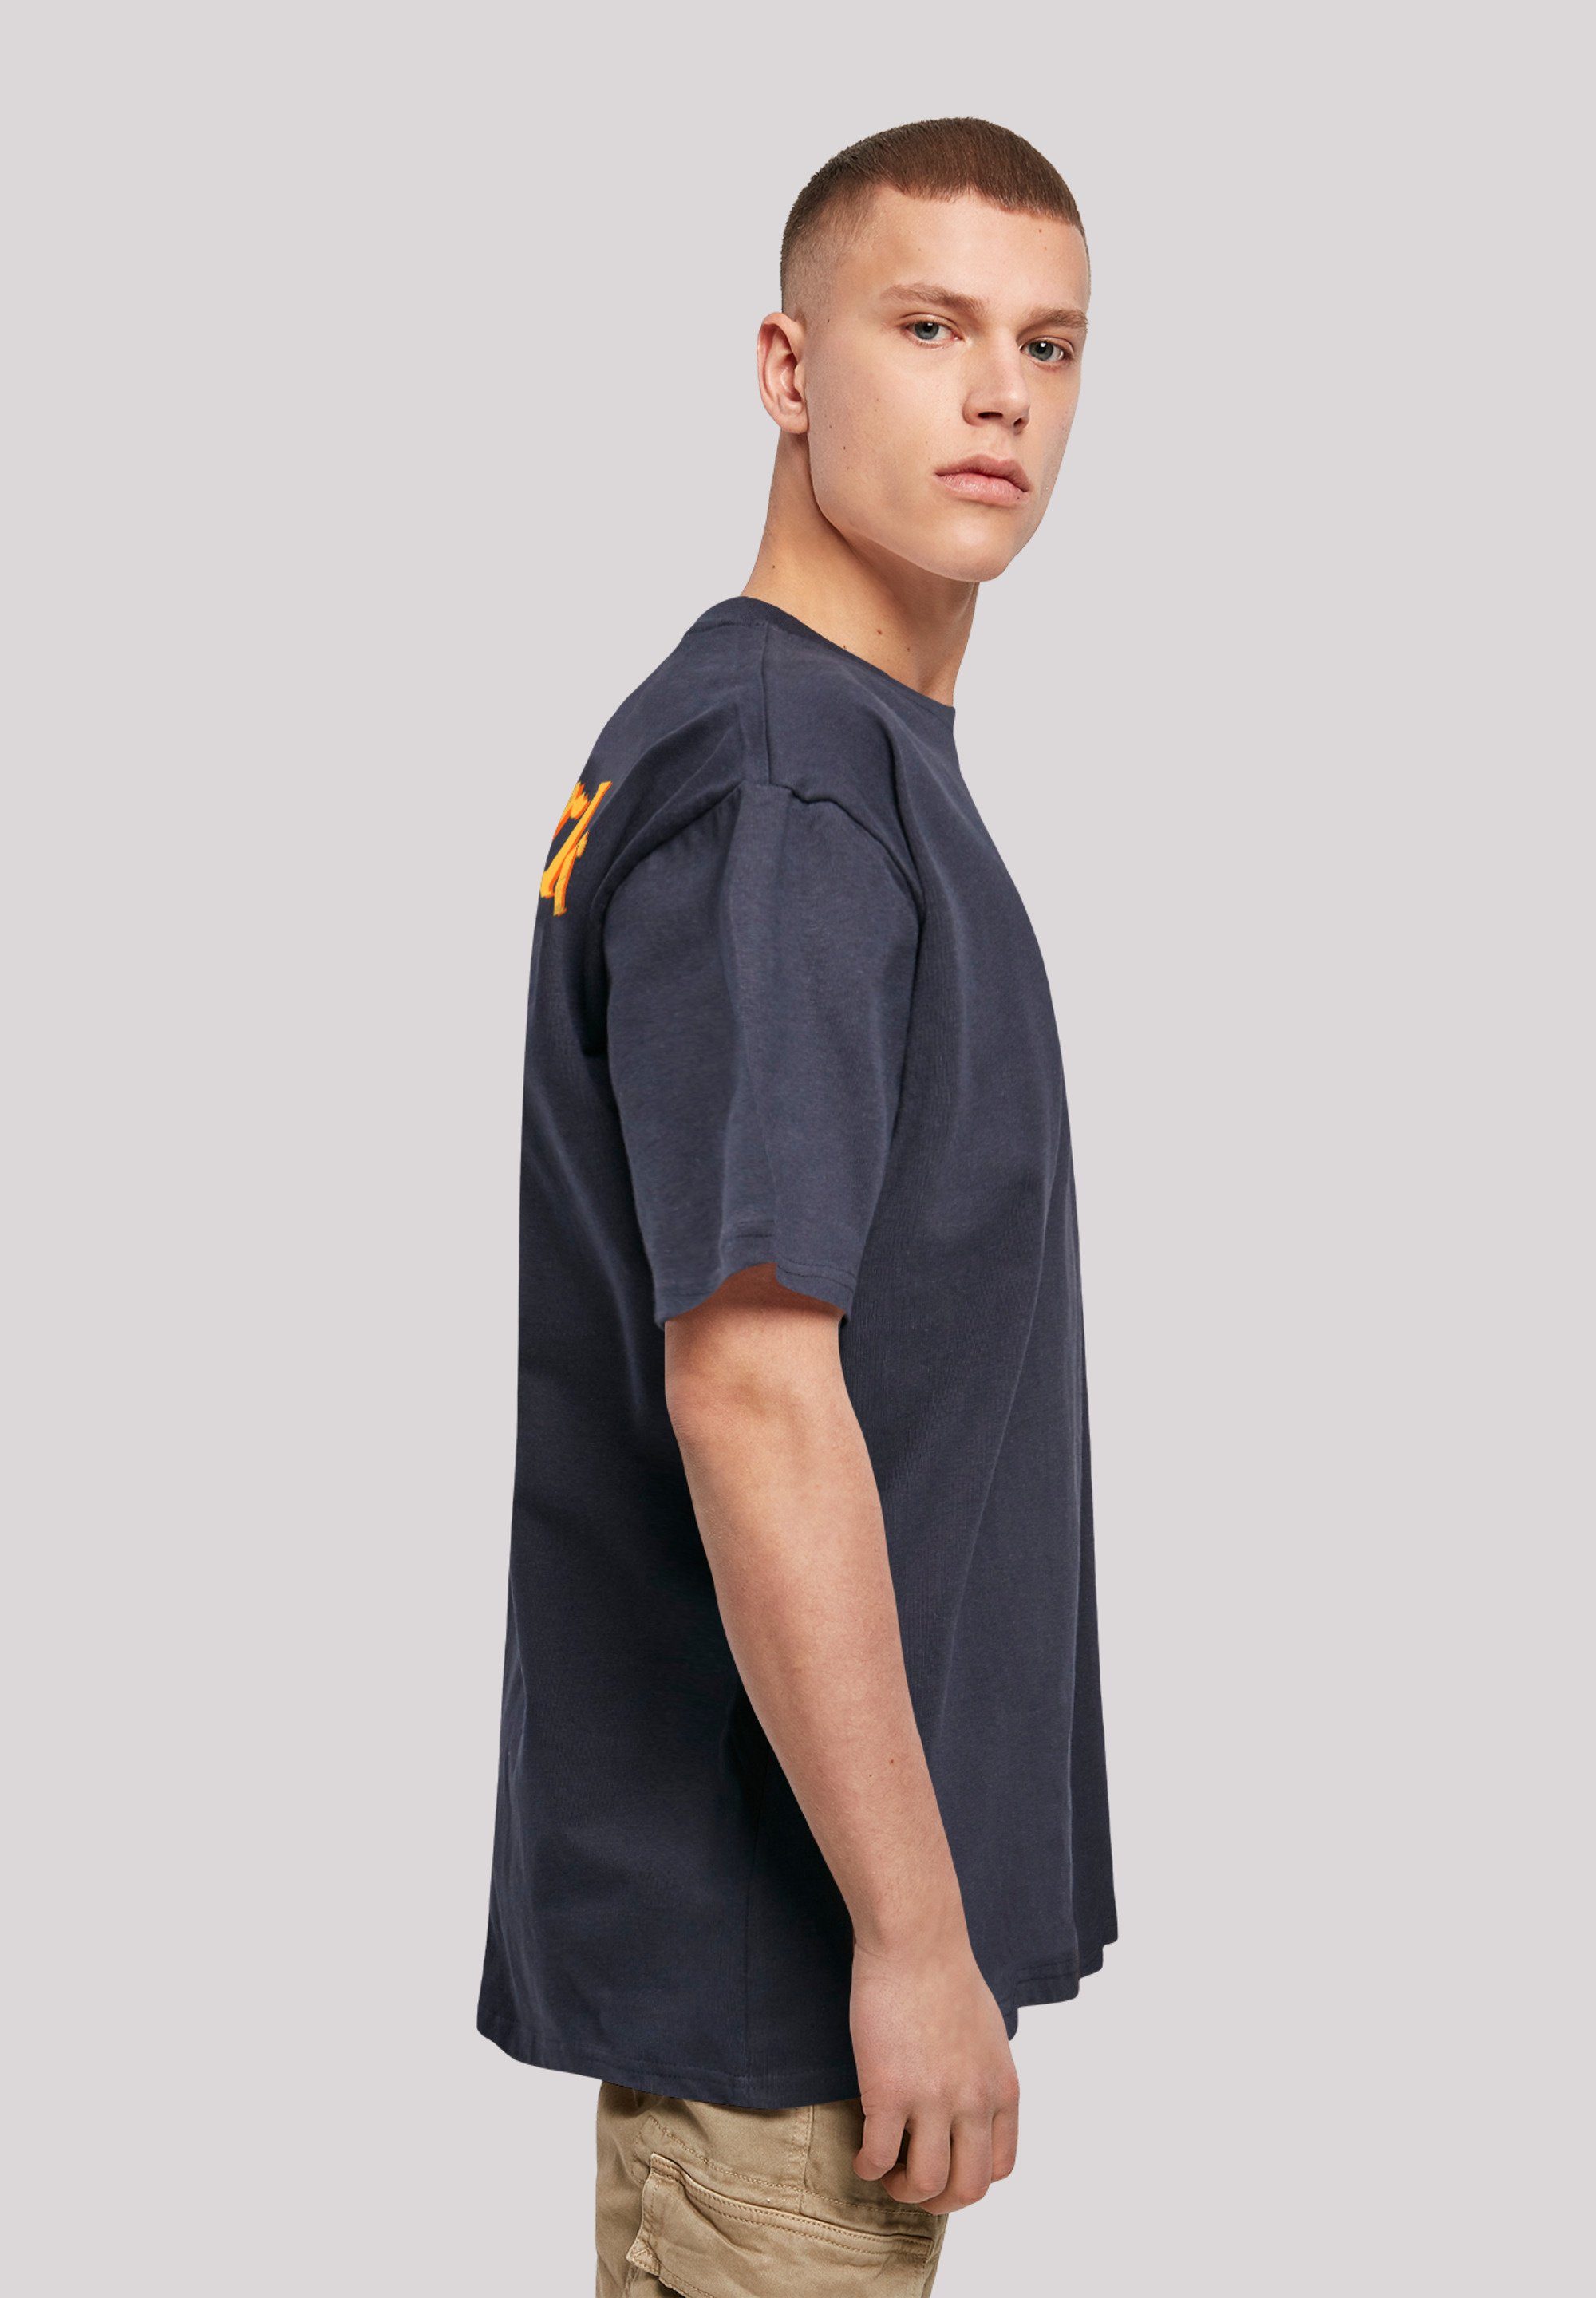 F4NT4STIC T-Shirt New York Print OVERSIZE navy TEE Orange